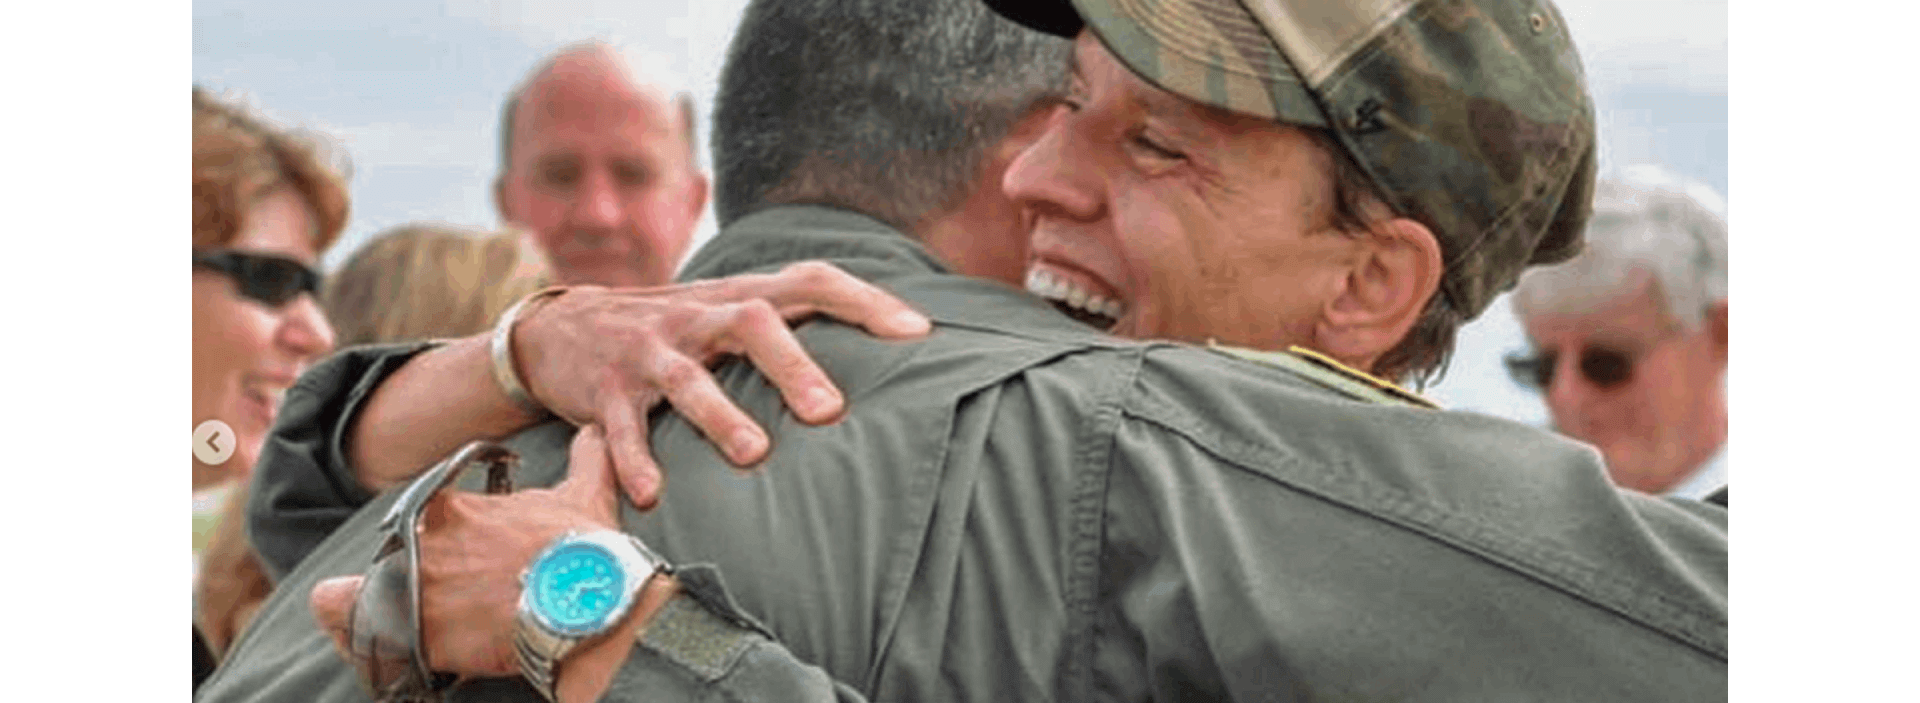 Abingdon Co. Image displays Retired Air Force Colonel Laurel “Buff” Burkel embracing a fellow serviceman